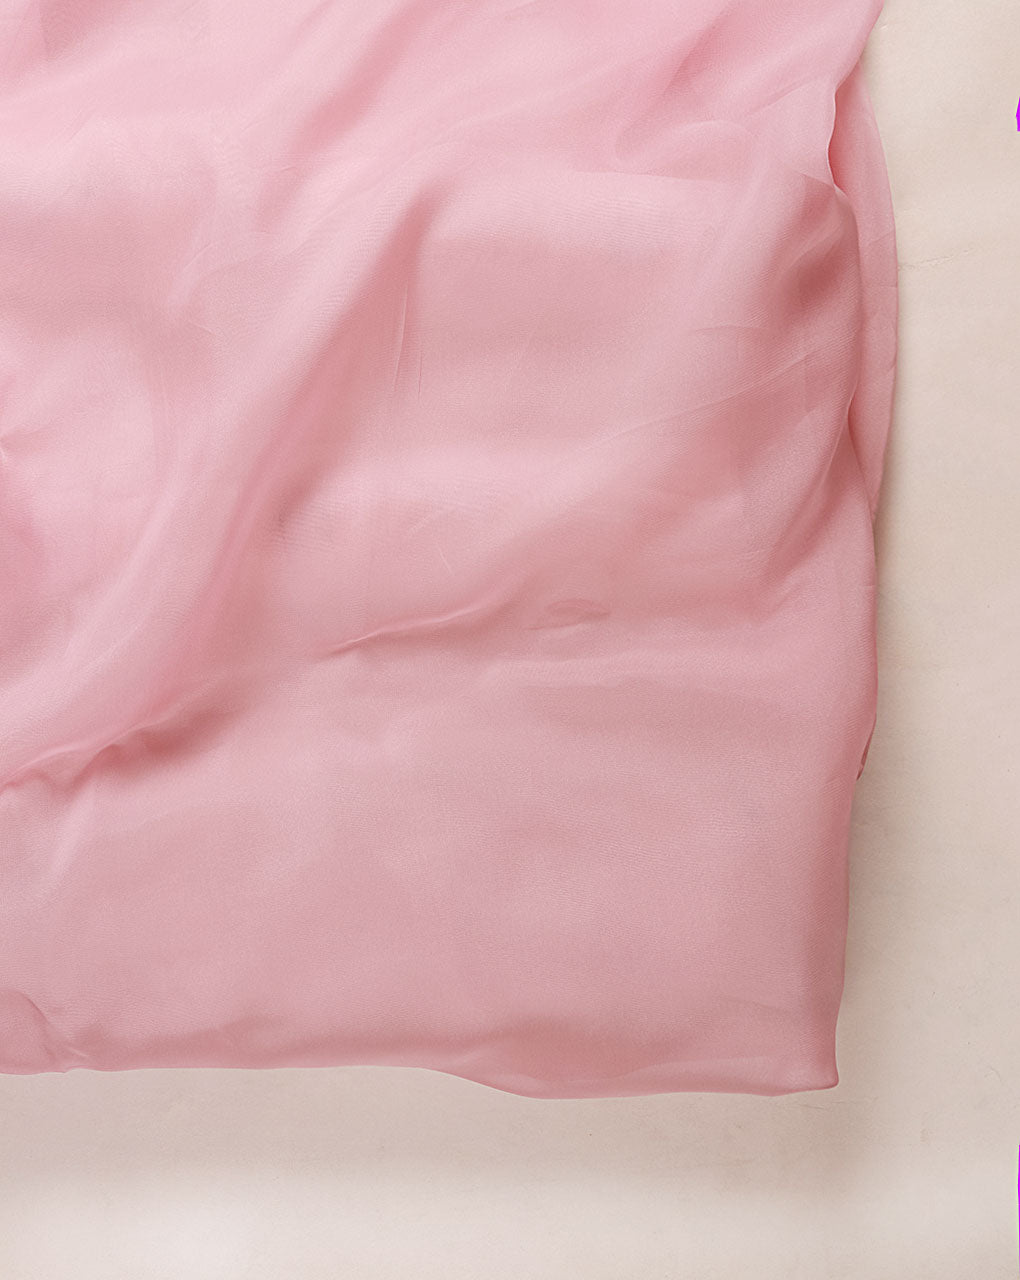 Pink Plain Viscose Organza Fabric